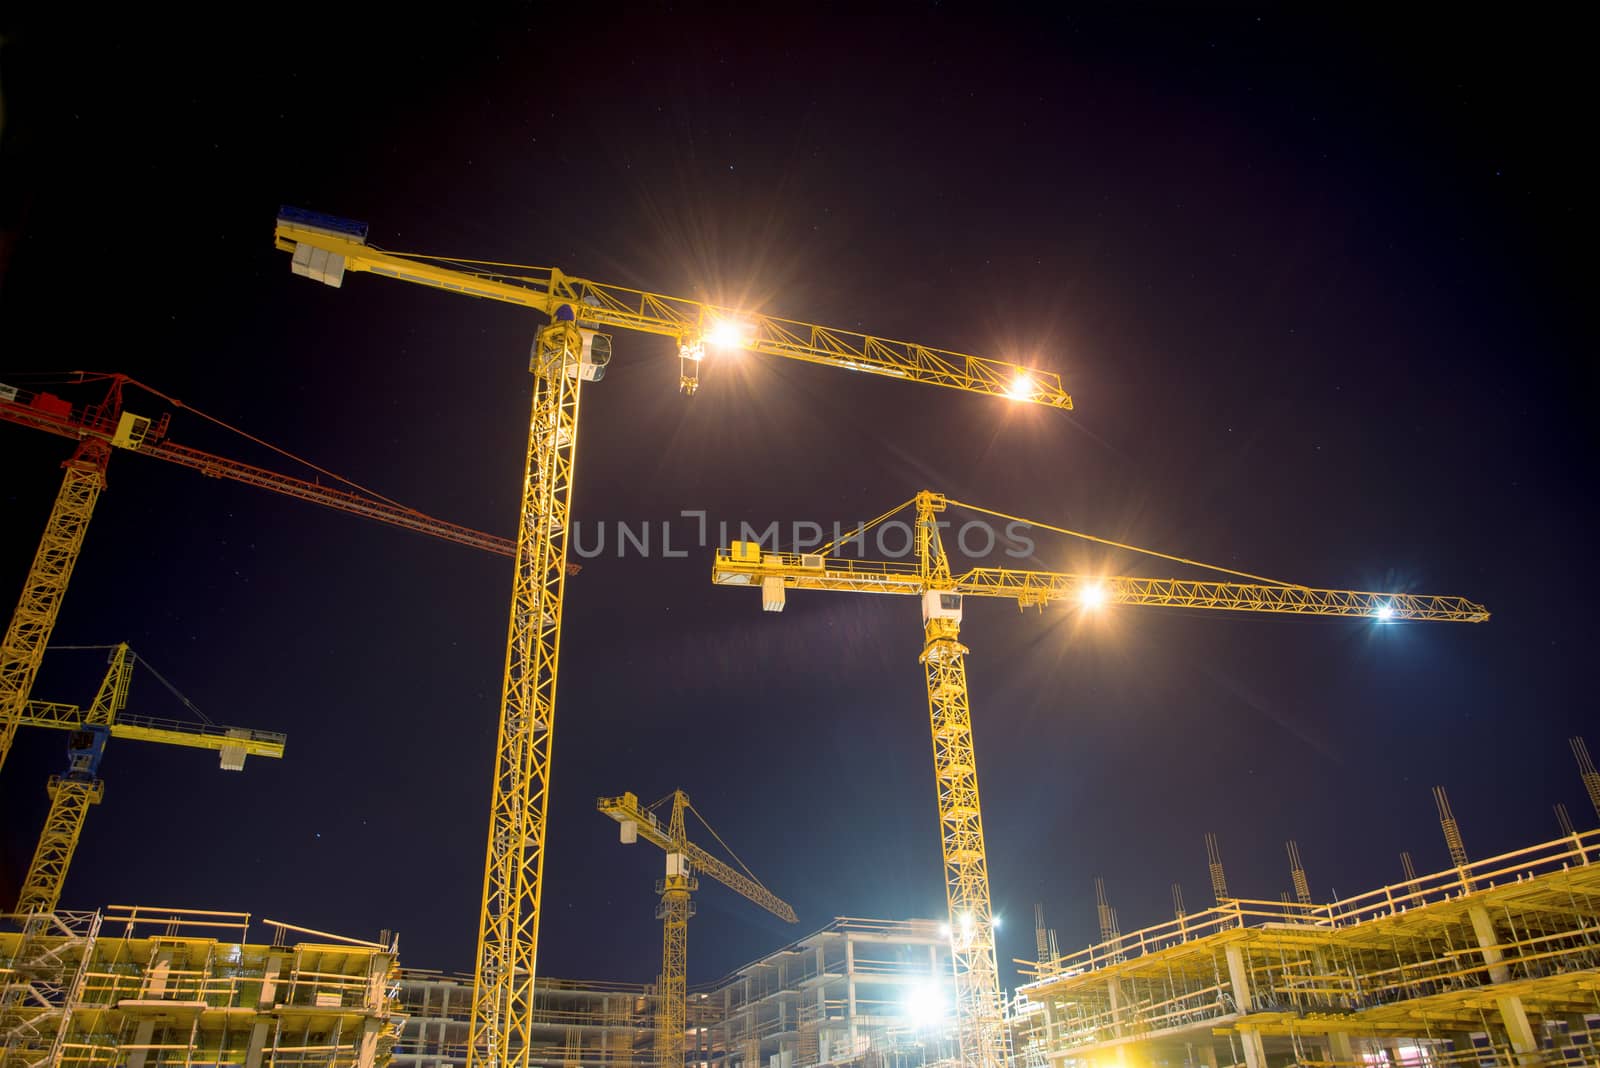 cranes and illumination at night by nejuras